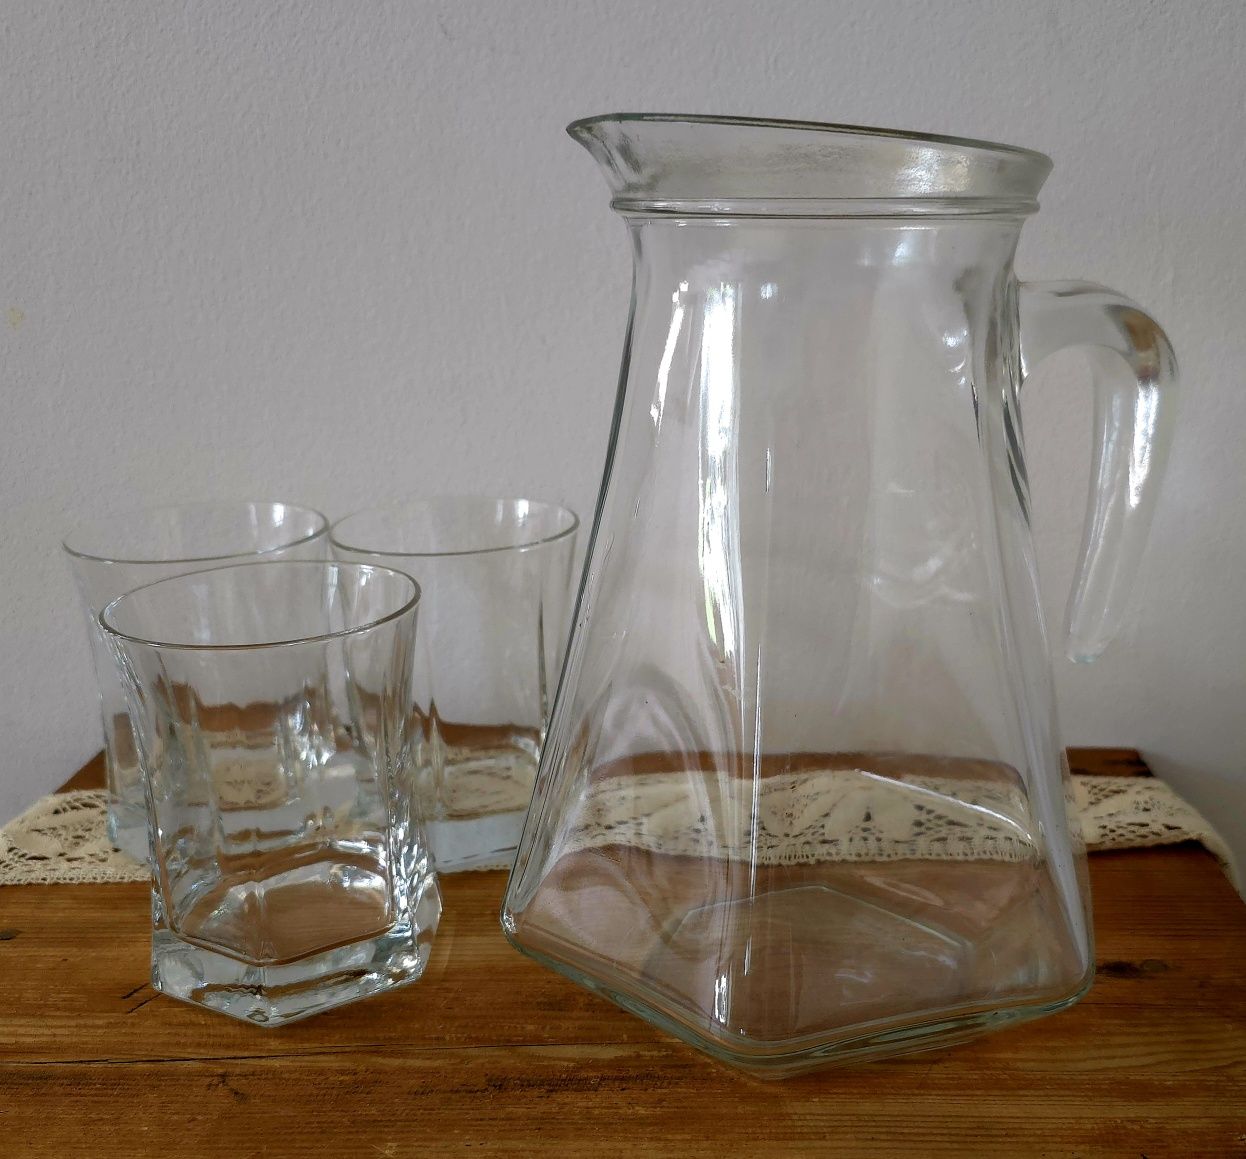 Dzbanek i szklanki stare szkło ciekawy kształt